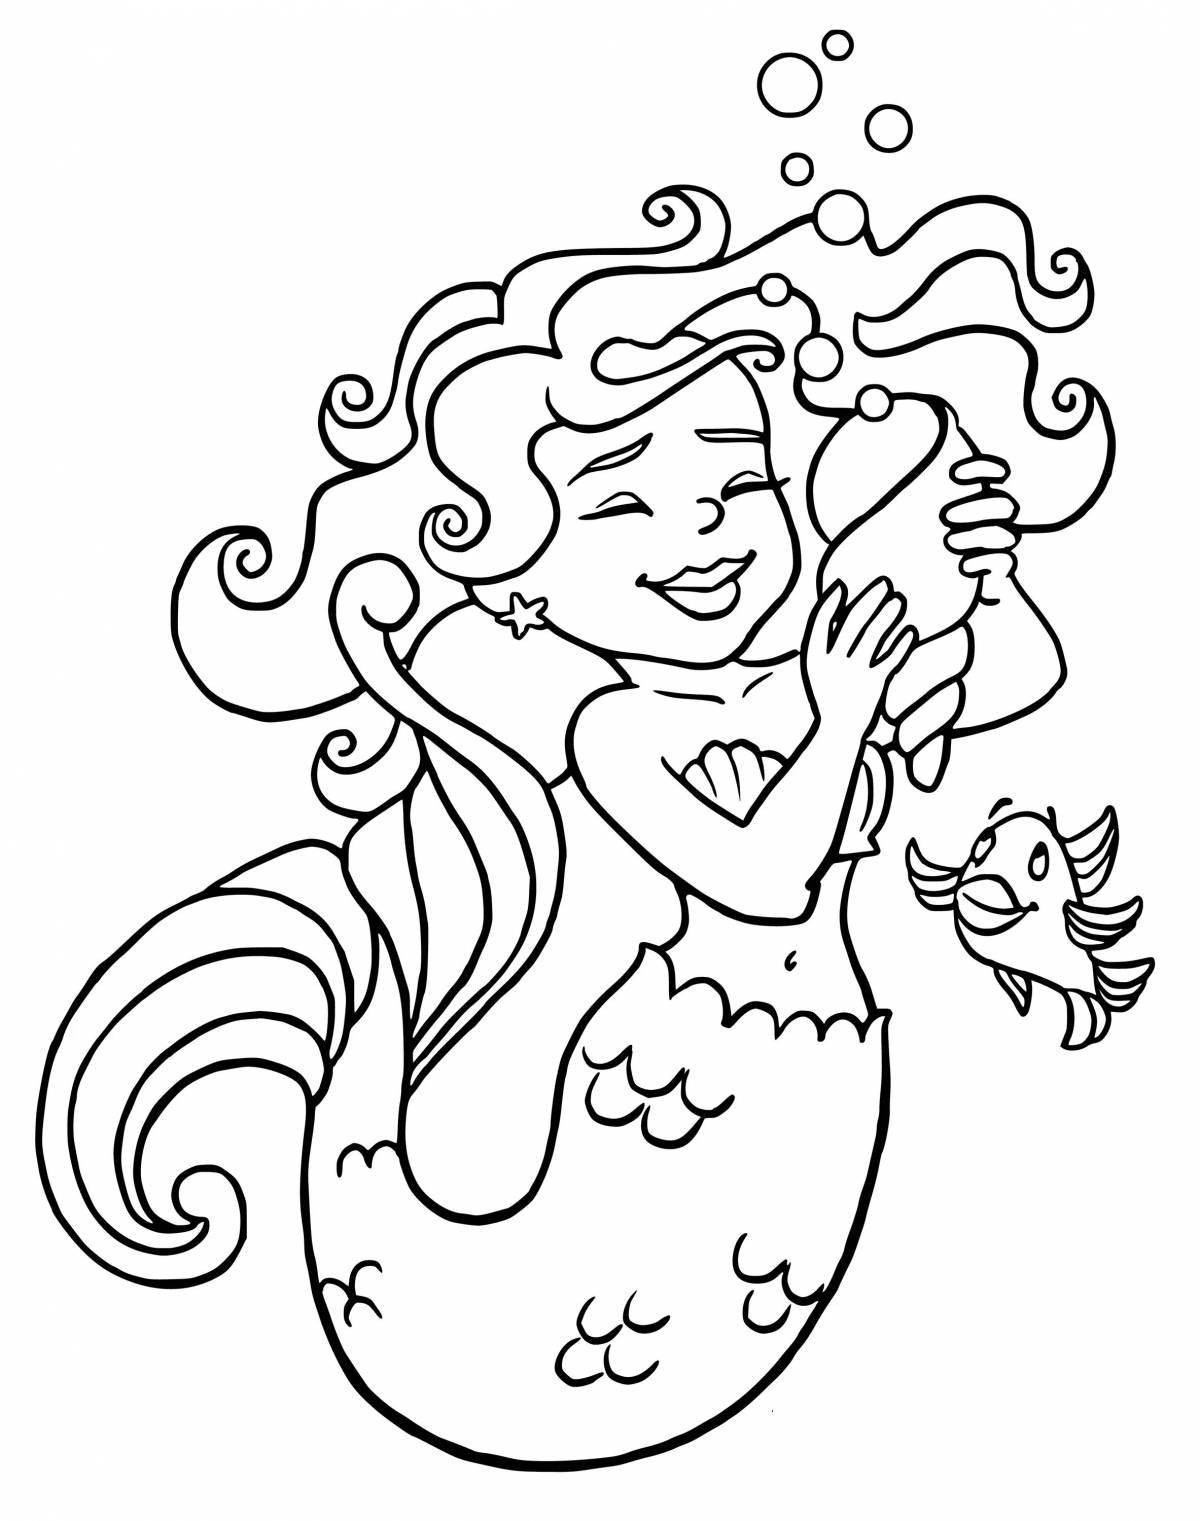 Beautiful coloring drawing of a mermaid